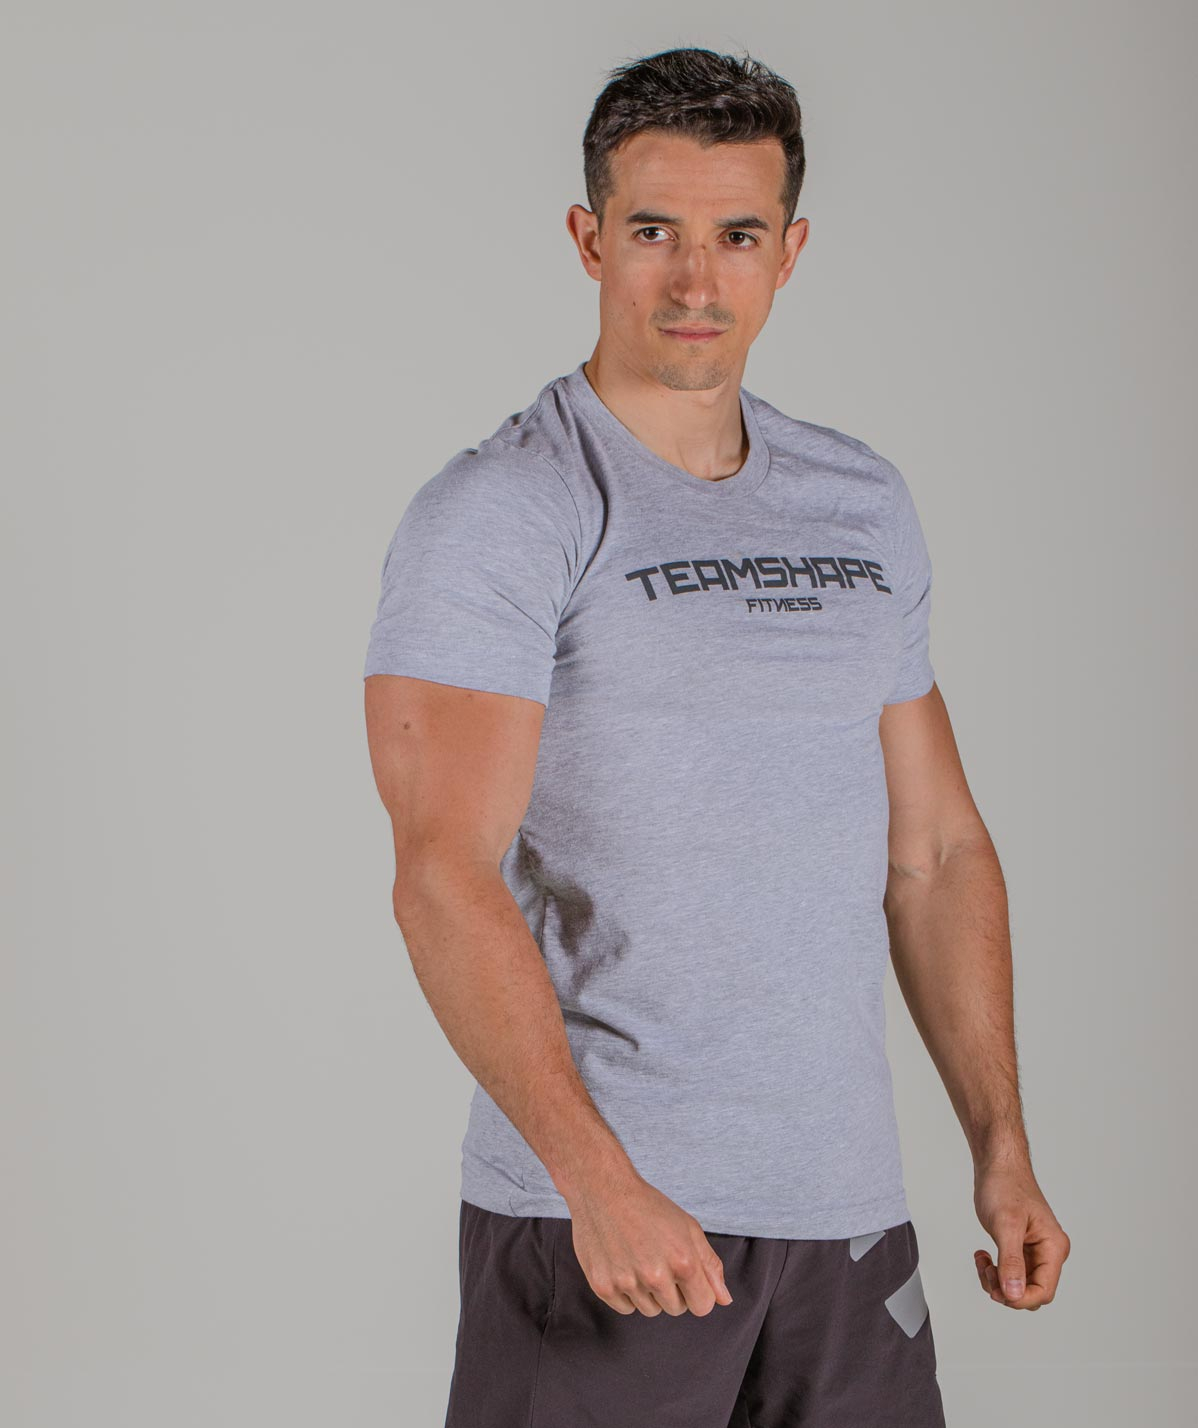 Tshirt Fitness Homme Cardio training - Vêtement homme sport TeamShape